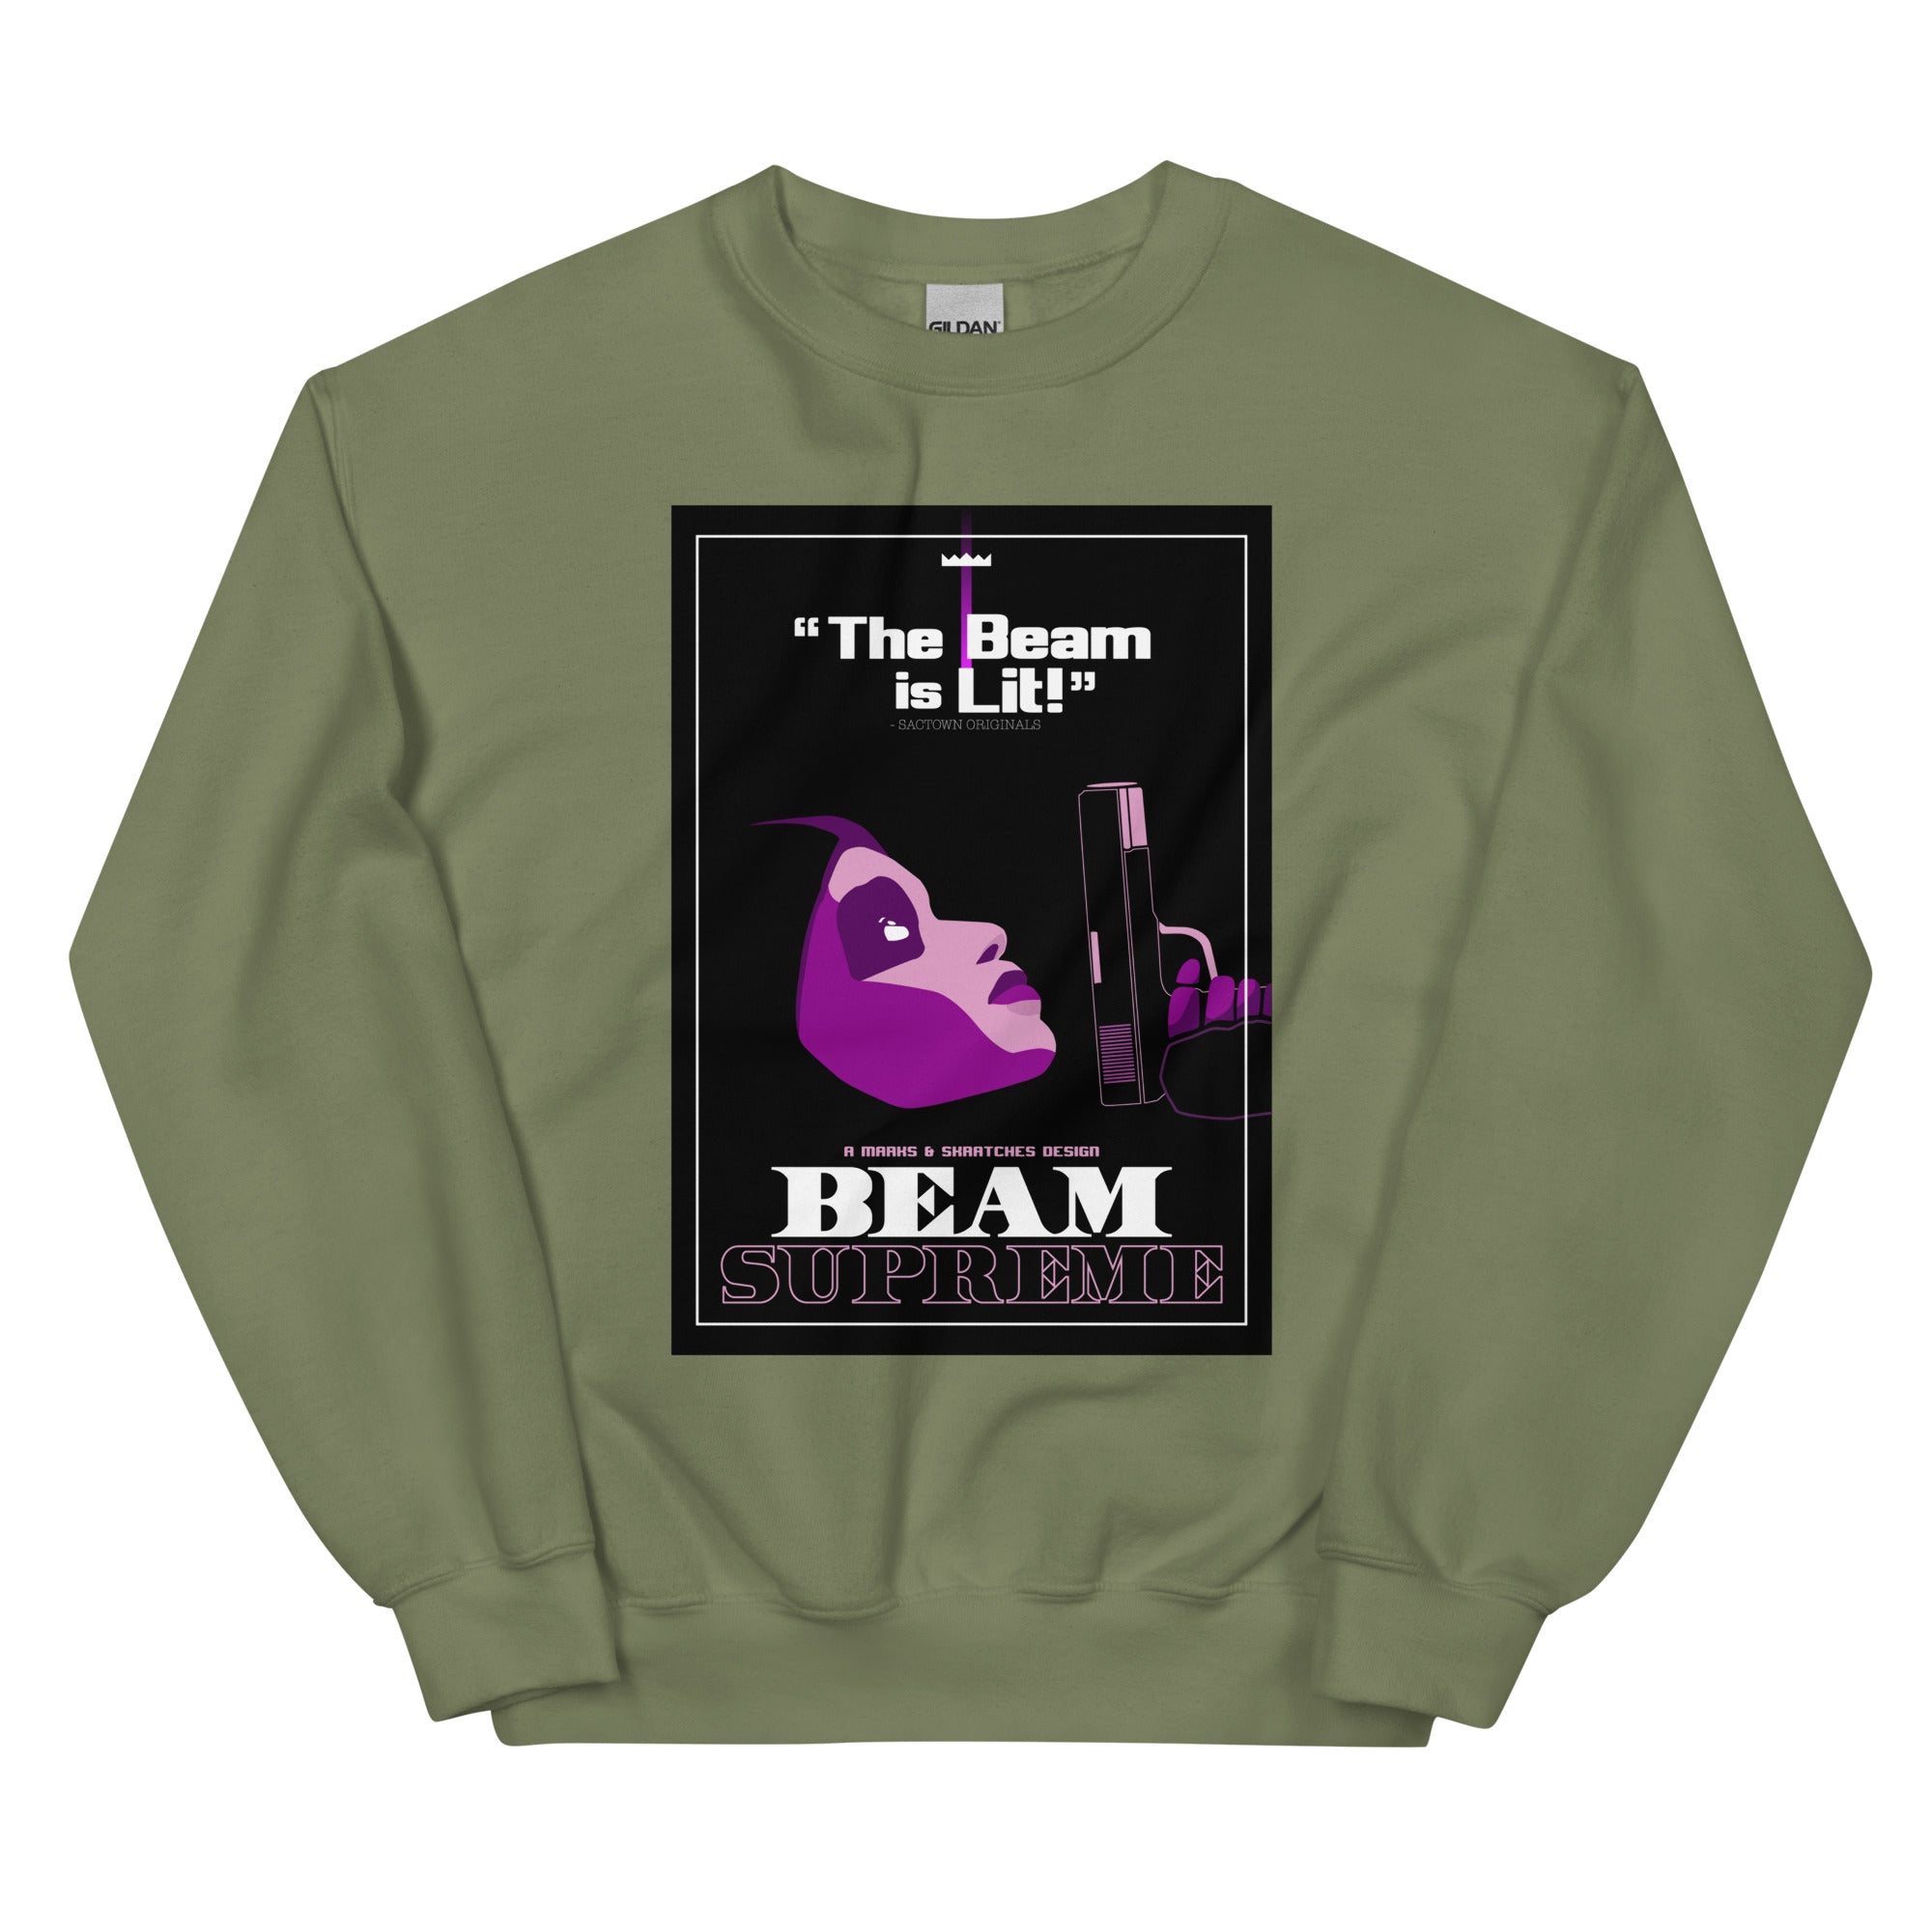 Beam Supreme Sweatshirt